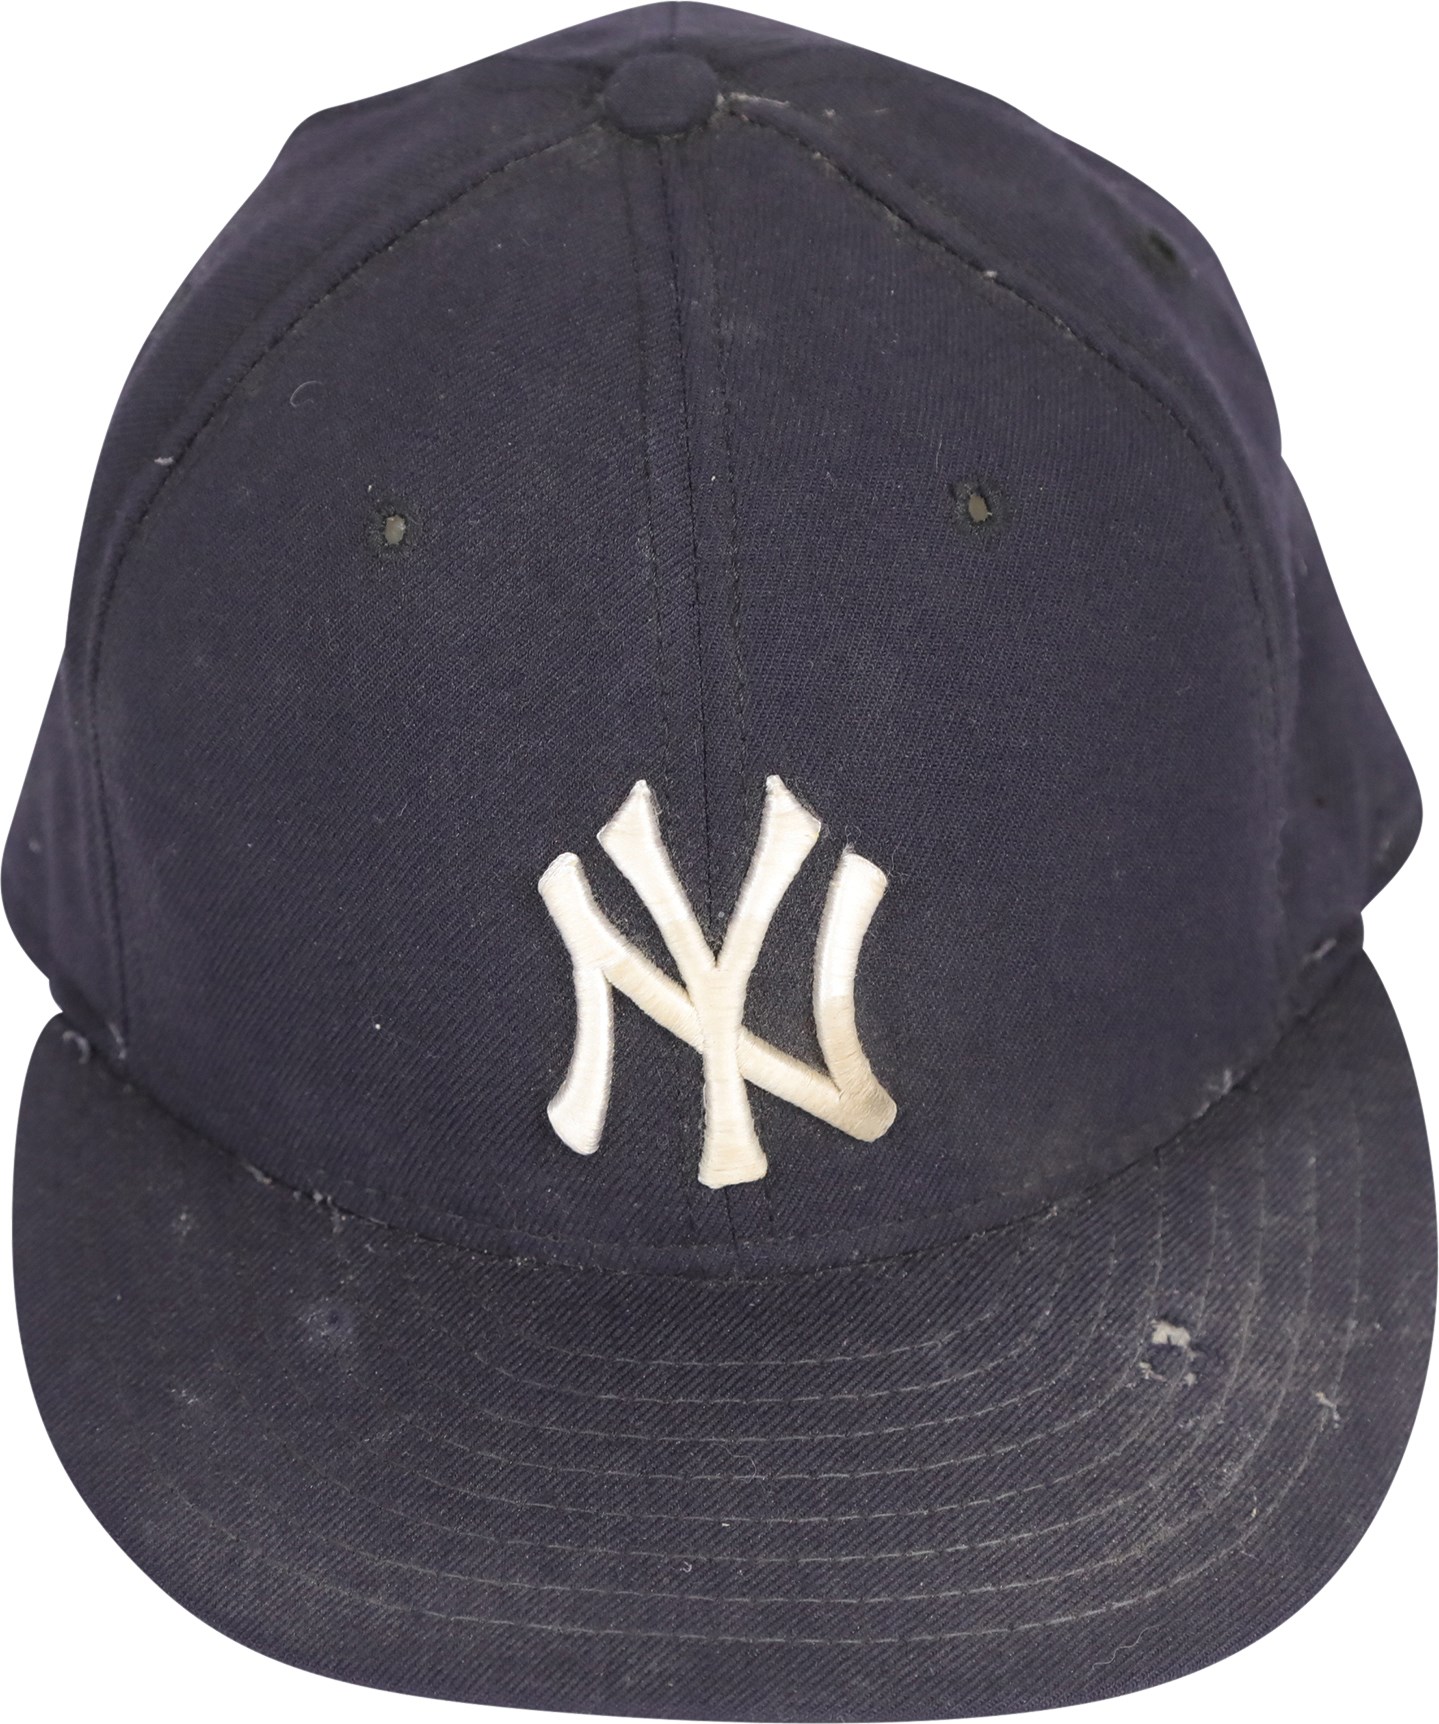 Baseball Equipment - 1996 Wade Boggs New York Yankees Game Used Hat